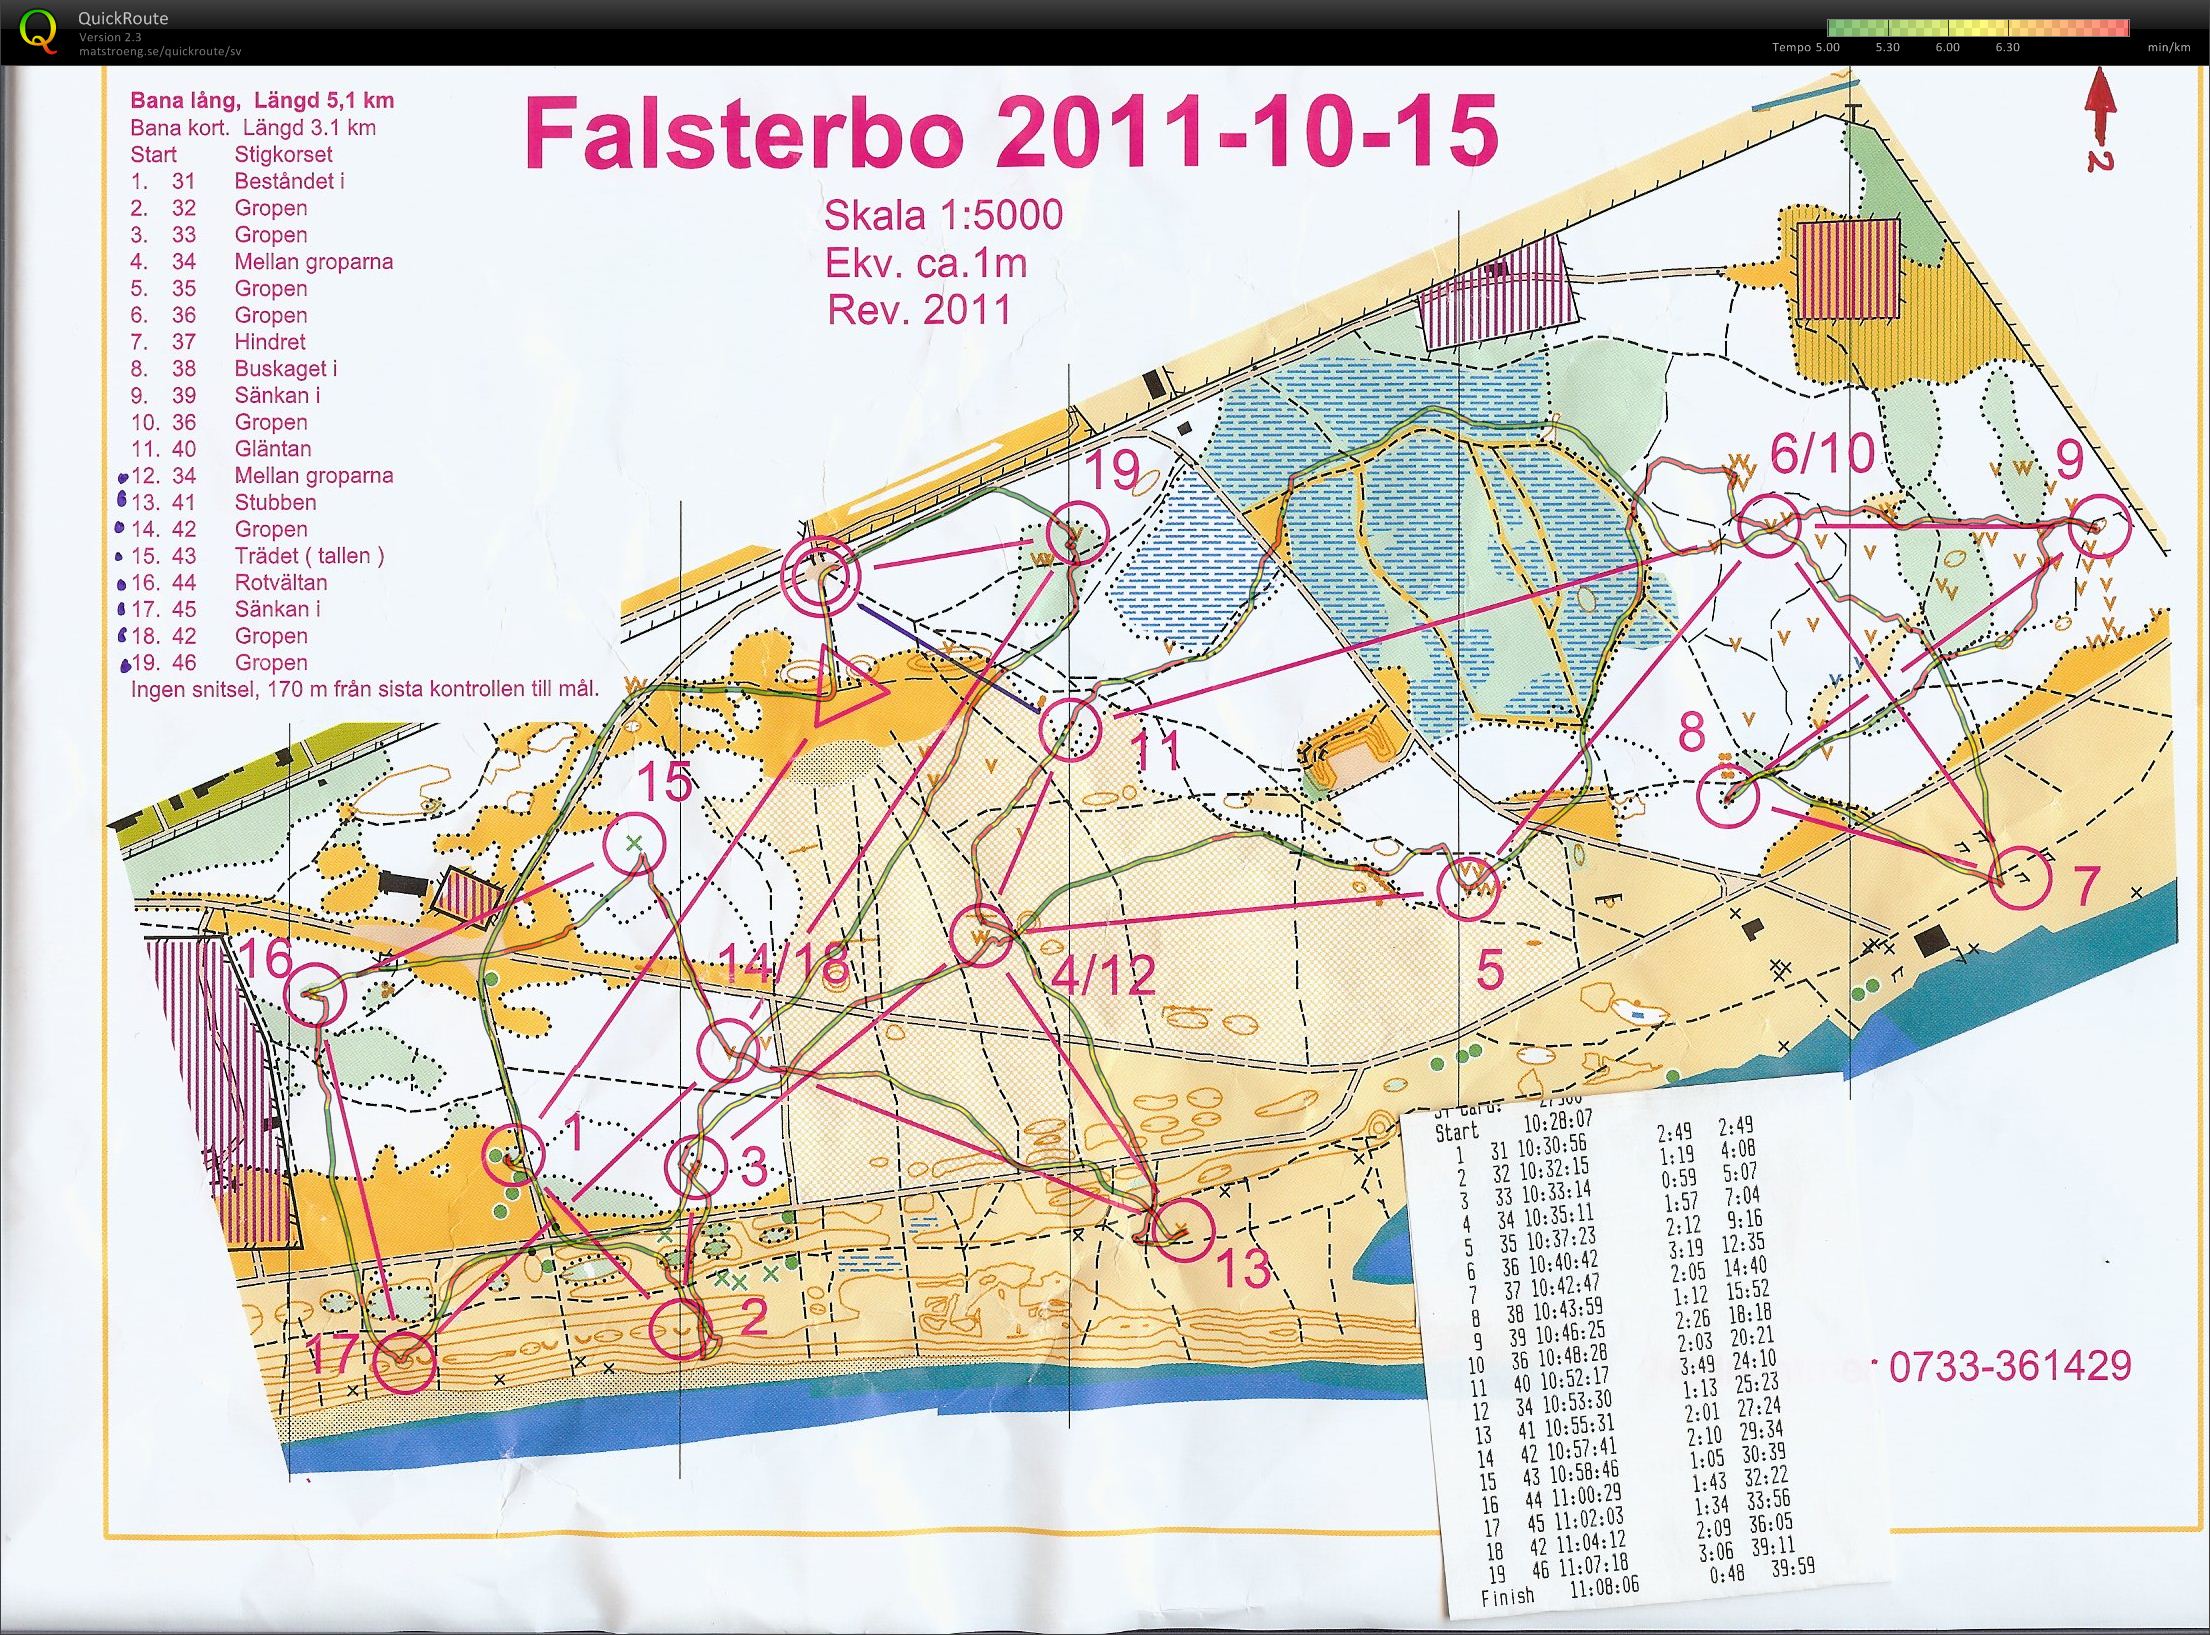 TPIF Falsterbo (15-10-2011)